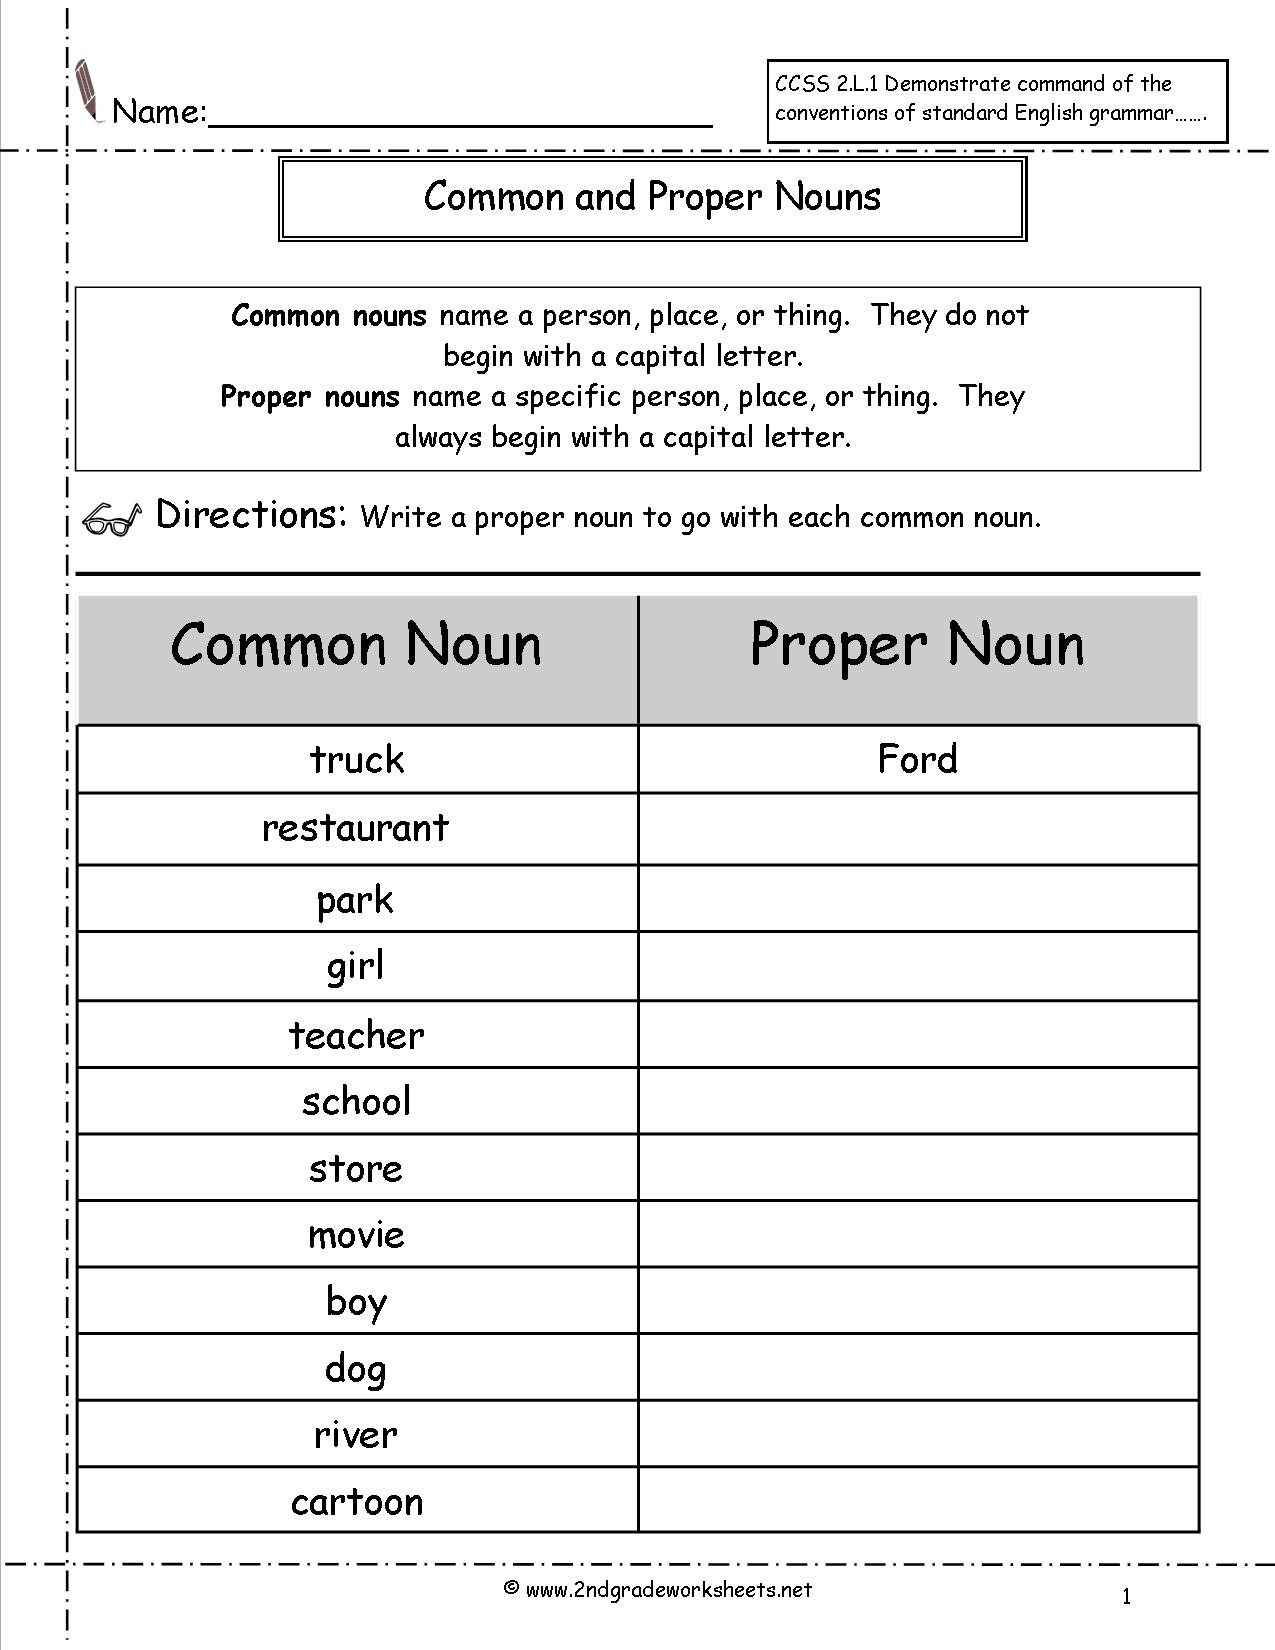 common-and-proper-nouns-nouns-worksheet-nouns-worksheet-proper-nouns-worksheet-nouns